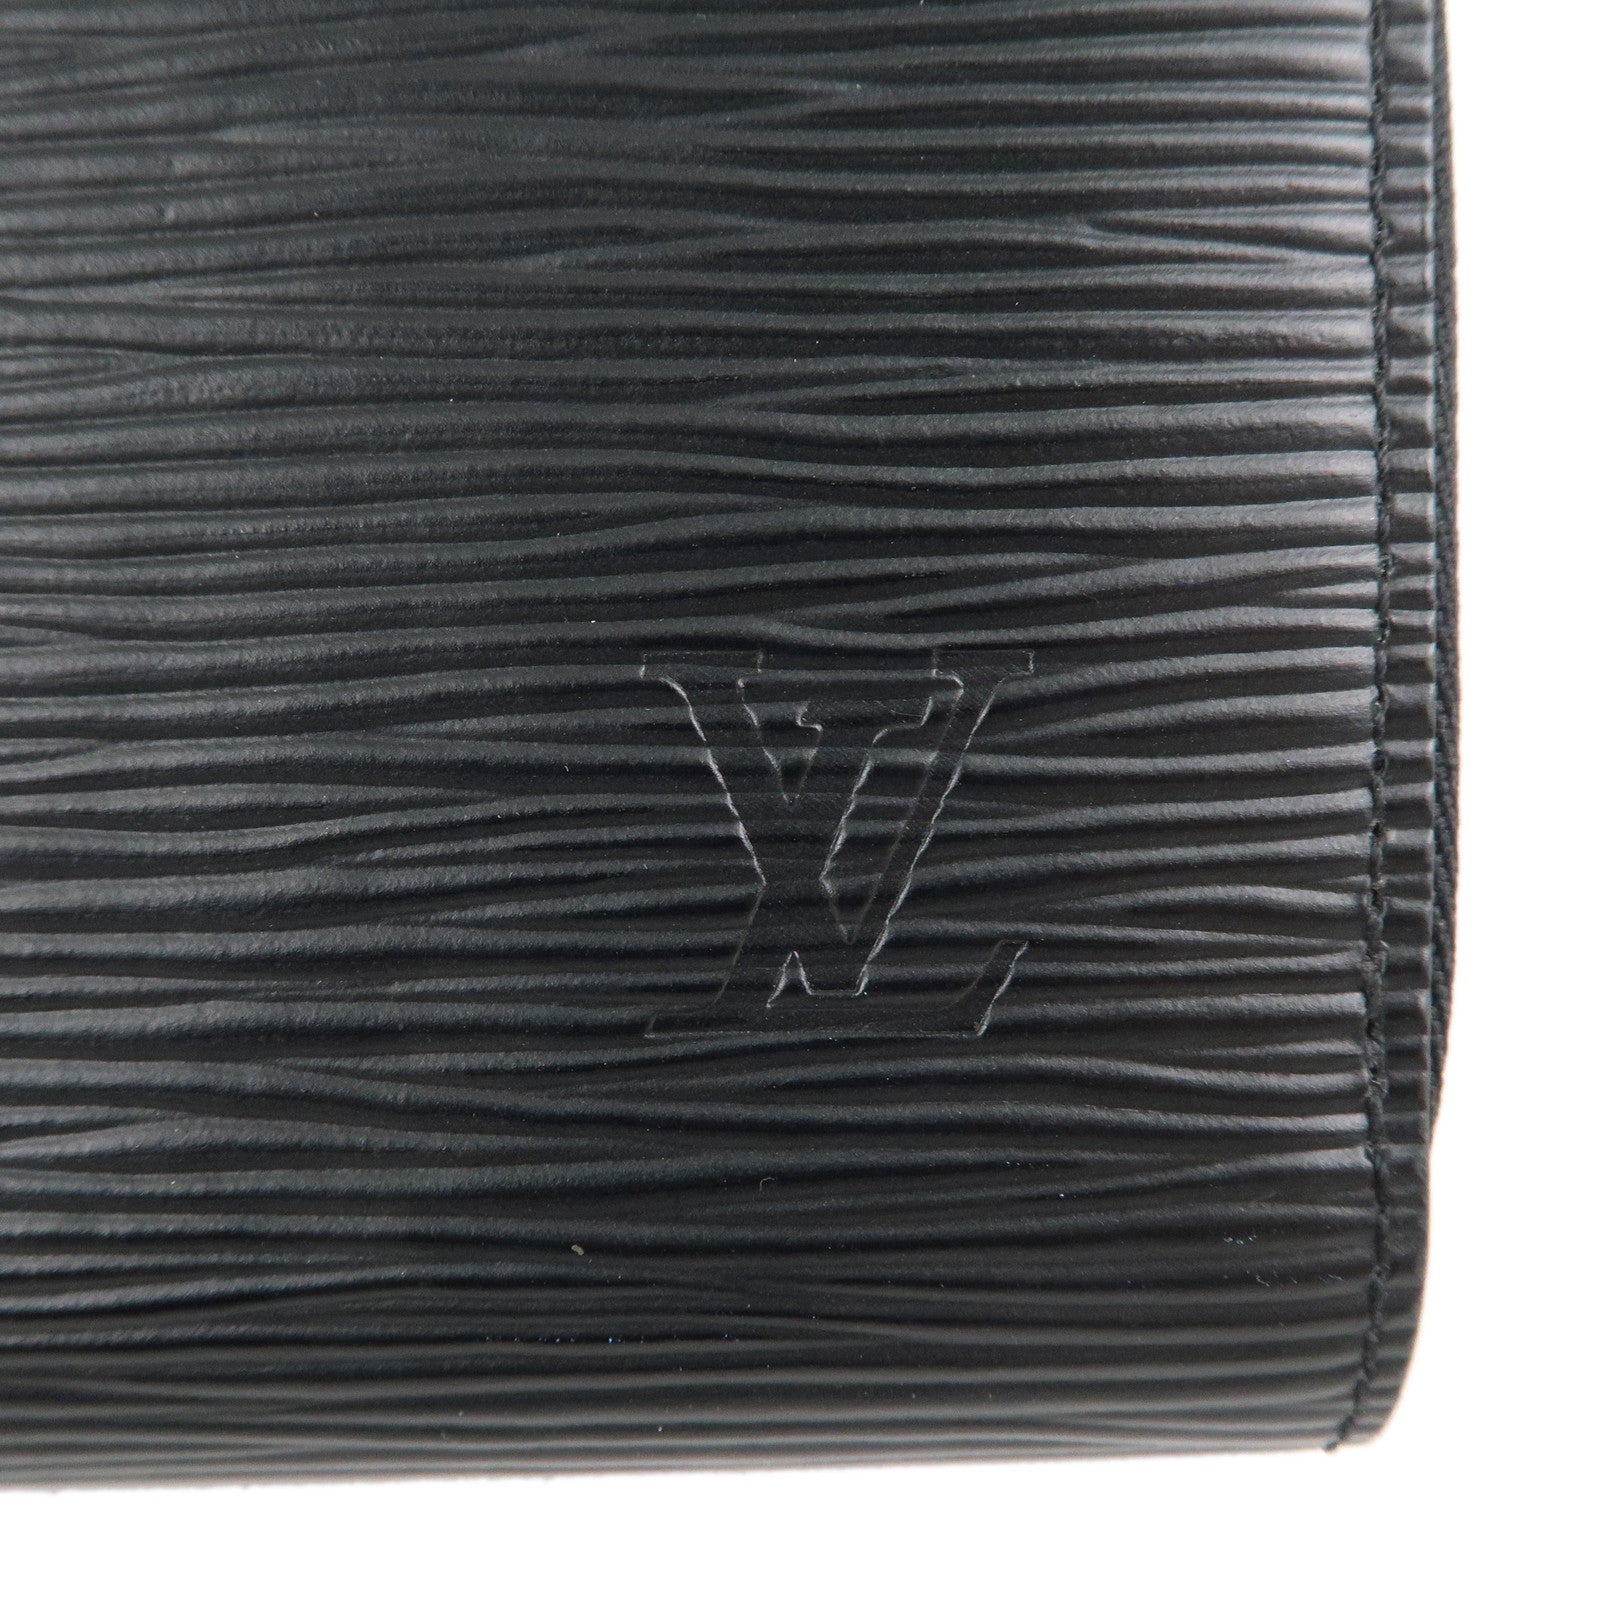 Louis Vuitton Epi Electric Zippy Wallet Deep Burgundy